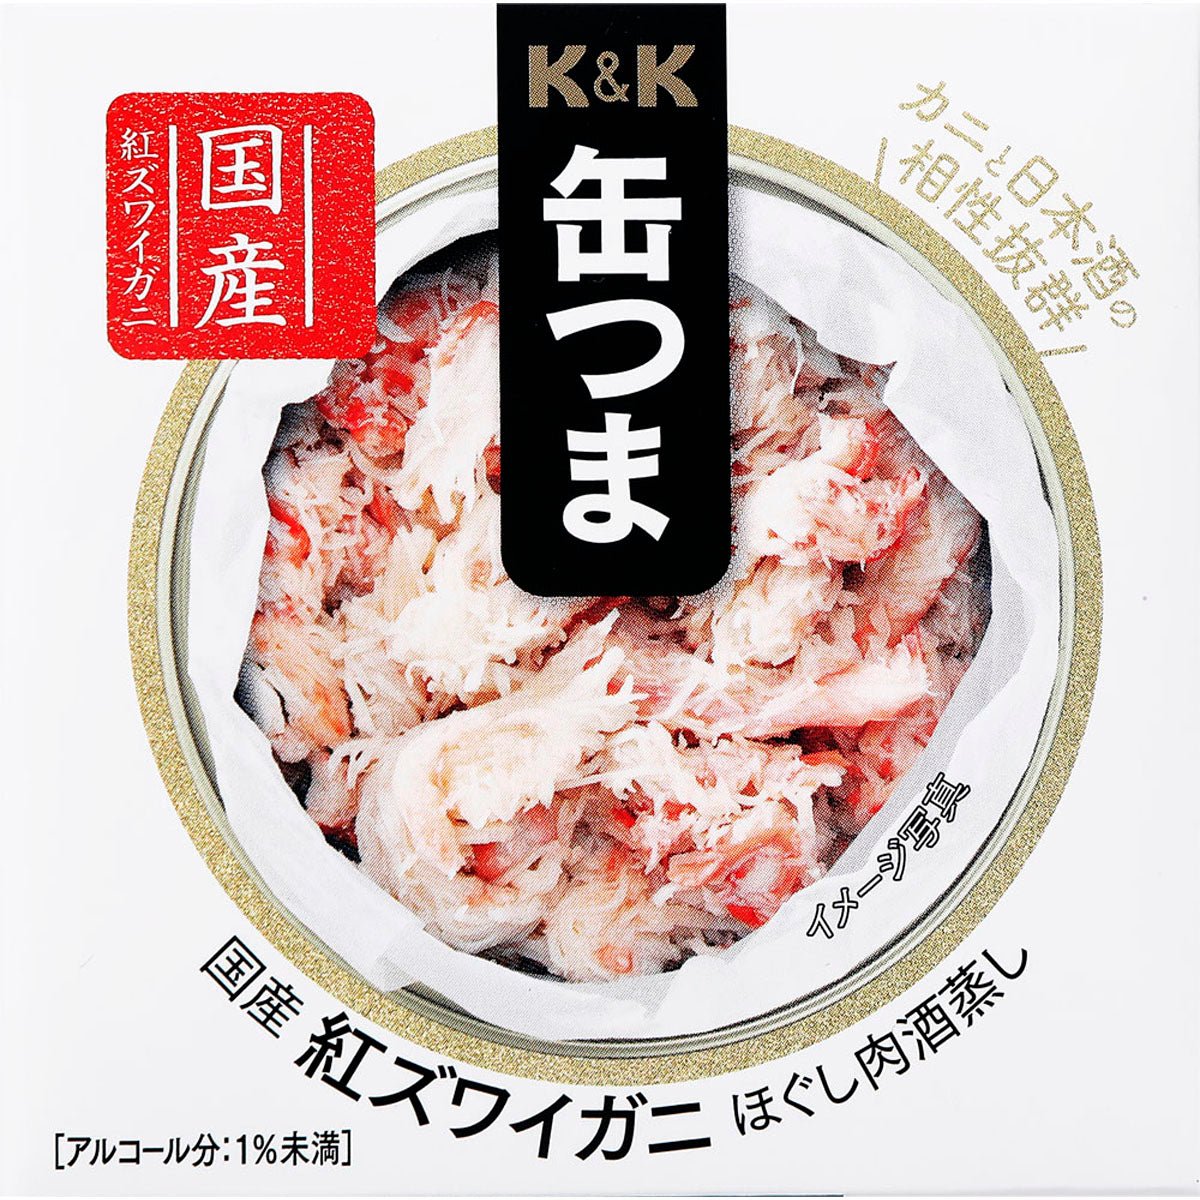 K & K CAN TSUMA 국내 레드 ZWAI CRAB ROIS- 찐 고기 찐 고기